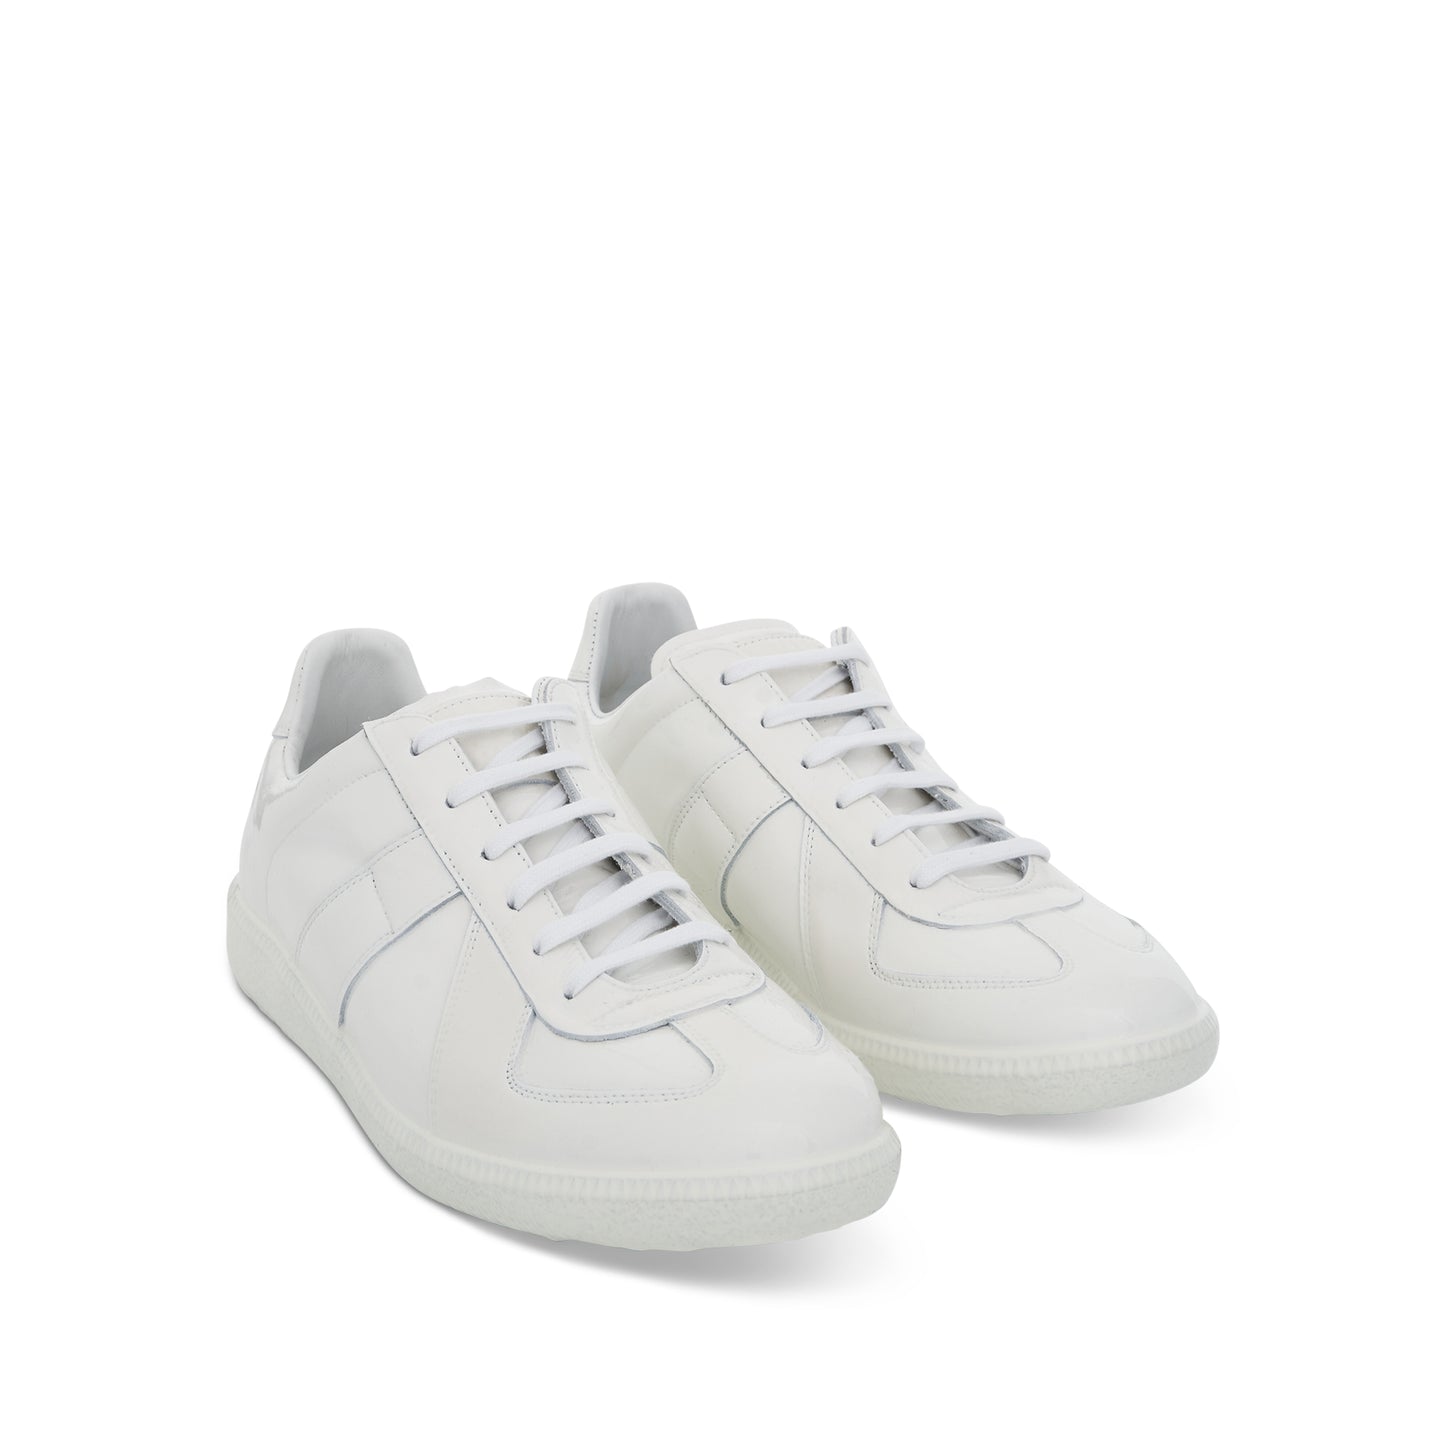 Replica Low Top Sneaker in White